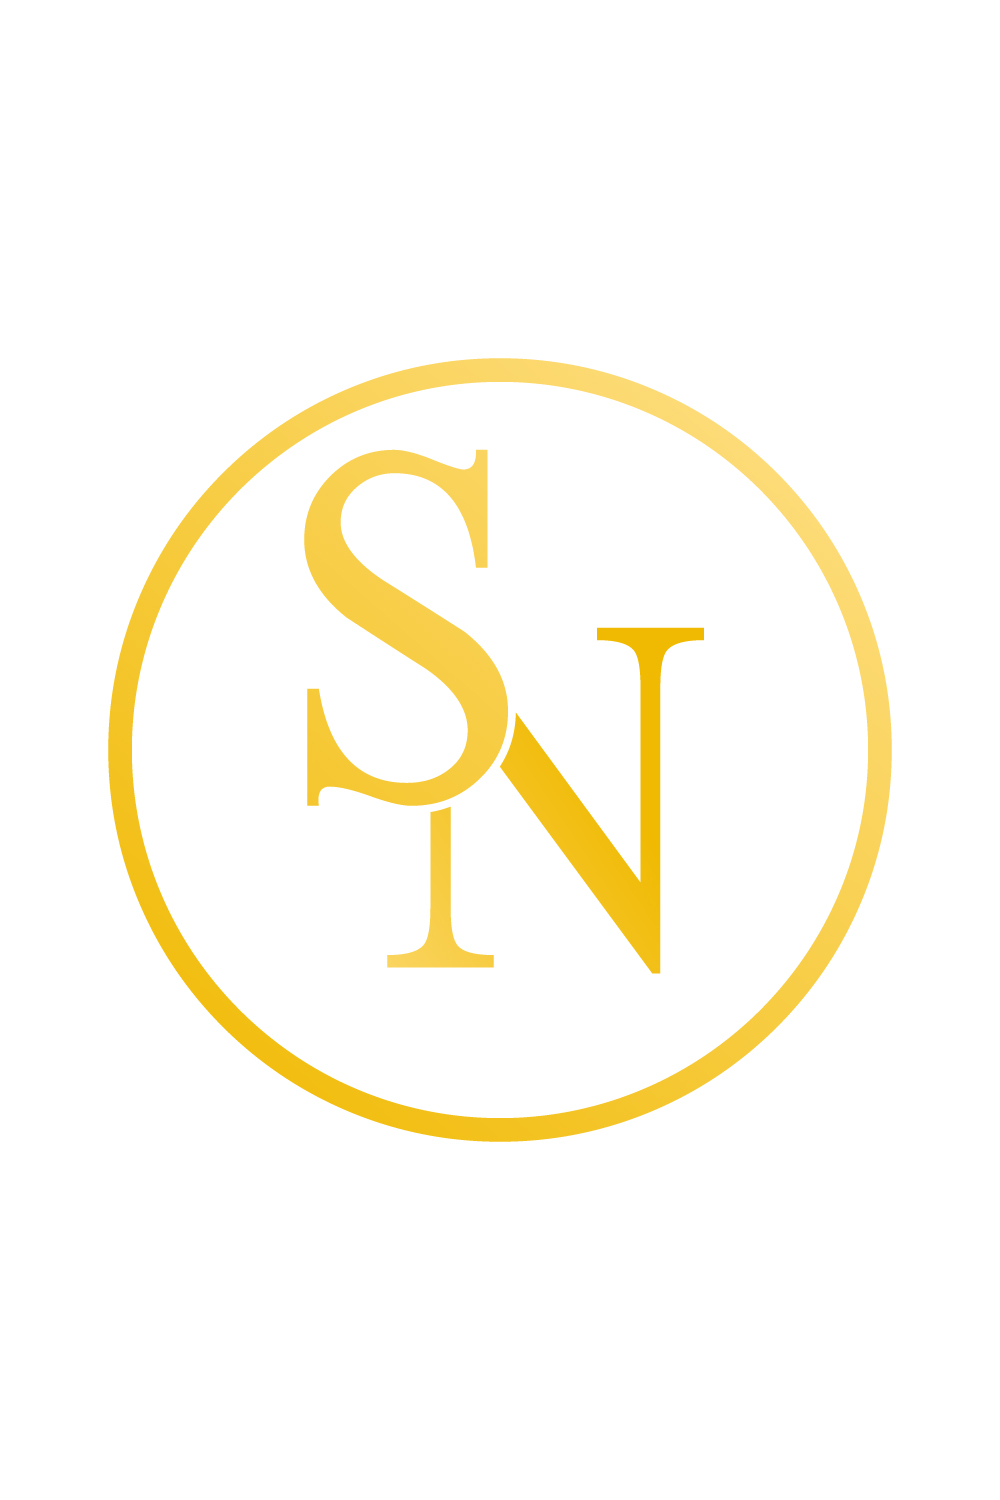 Luxury SN logo design vector icon SN letters logo design Golden color best logo NS golden color circle logo monogram company identity logo pinterest preview image.